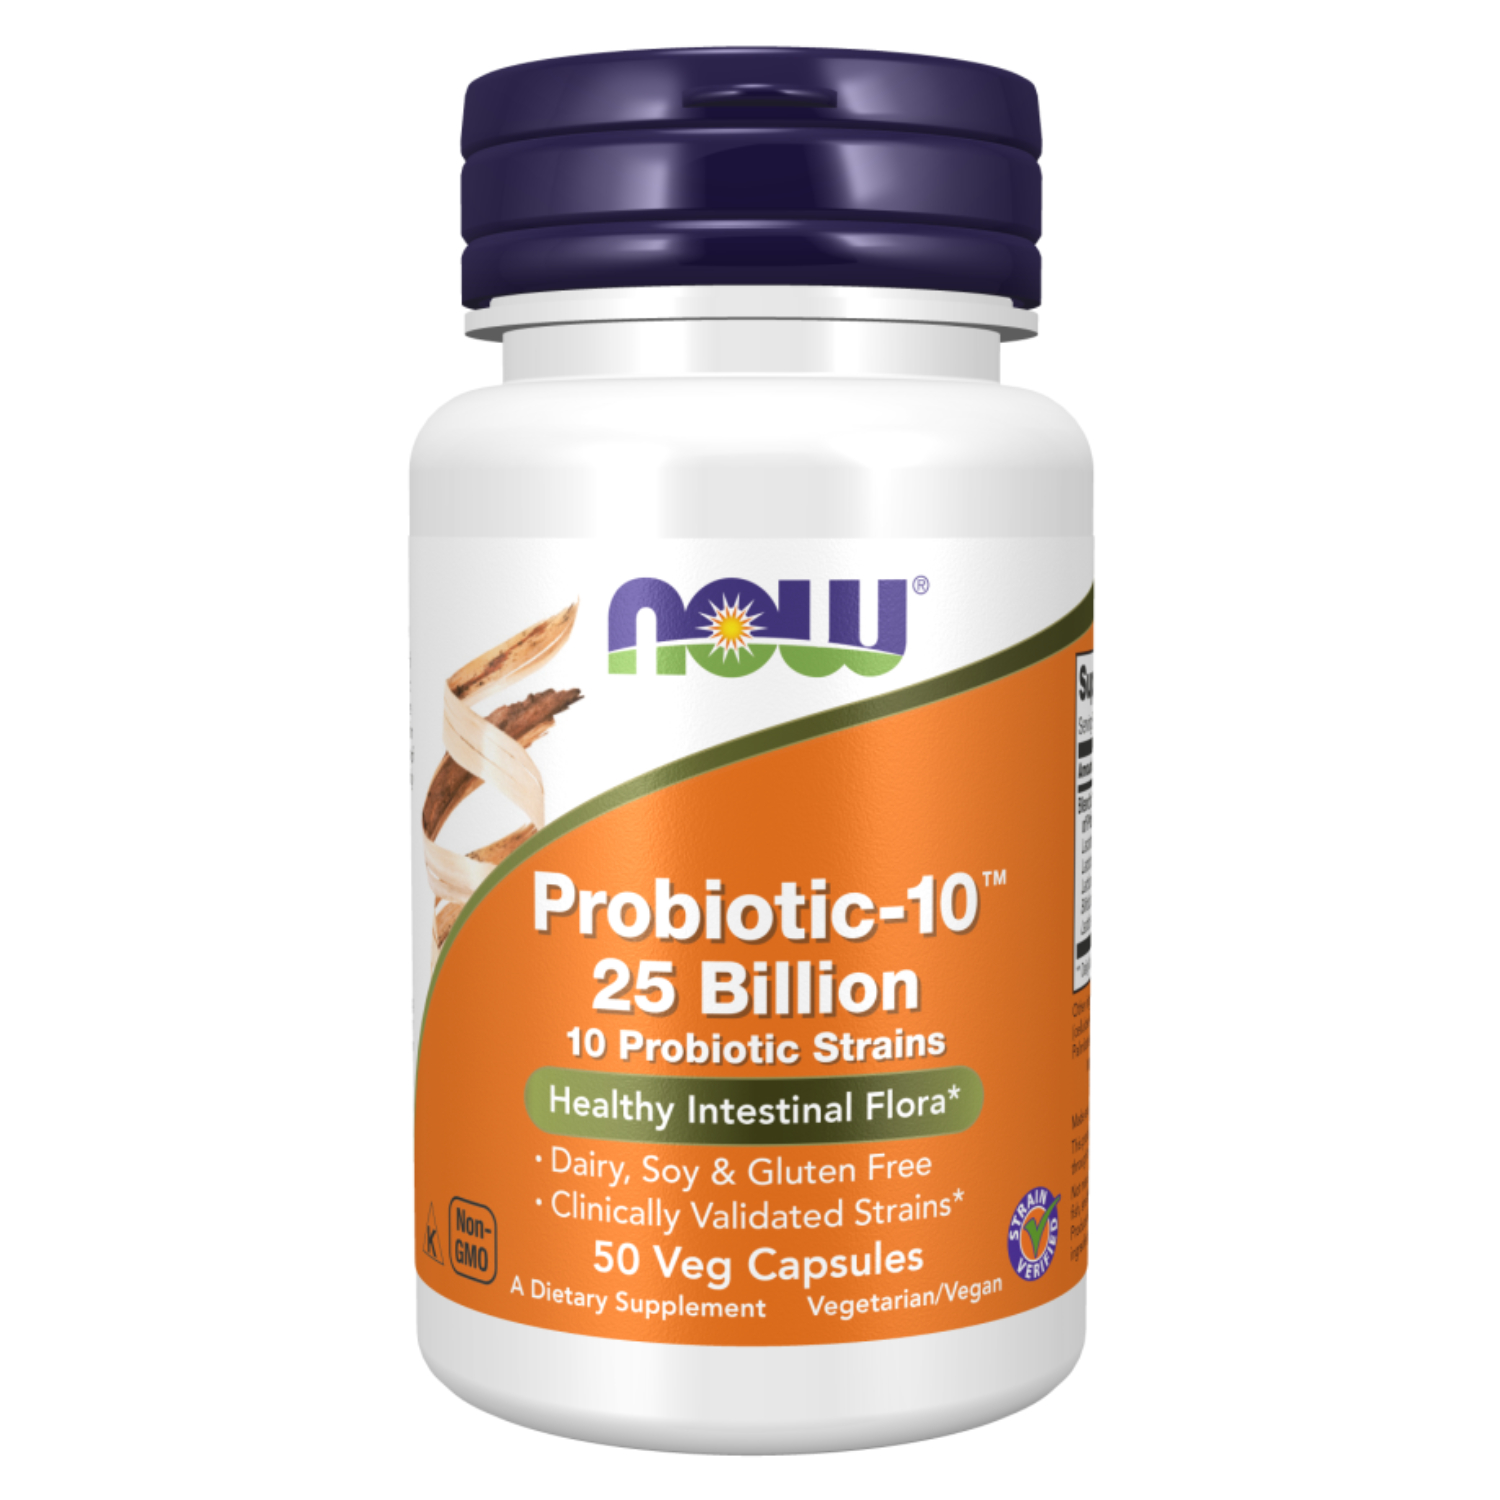 Back Image for Now Probiotic-10 25 Billion Capsules 50's